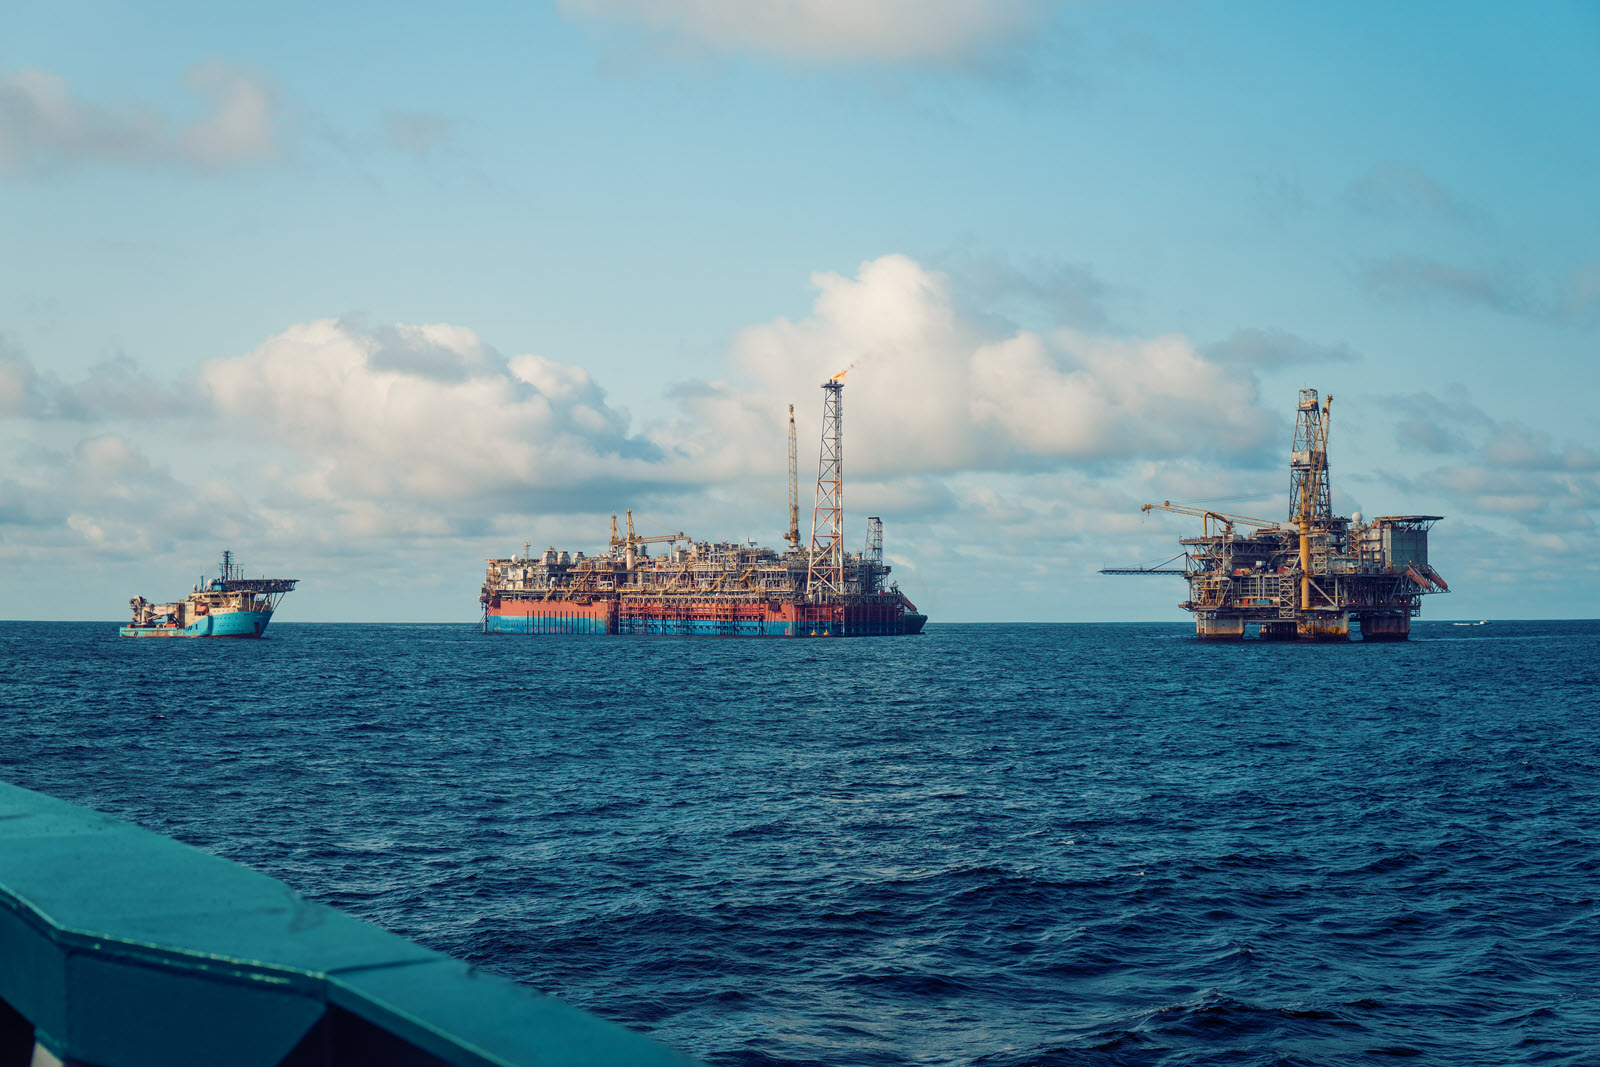 fpso-tanker-vessel-near-oil-rig-platform-offshore